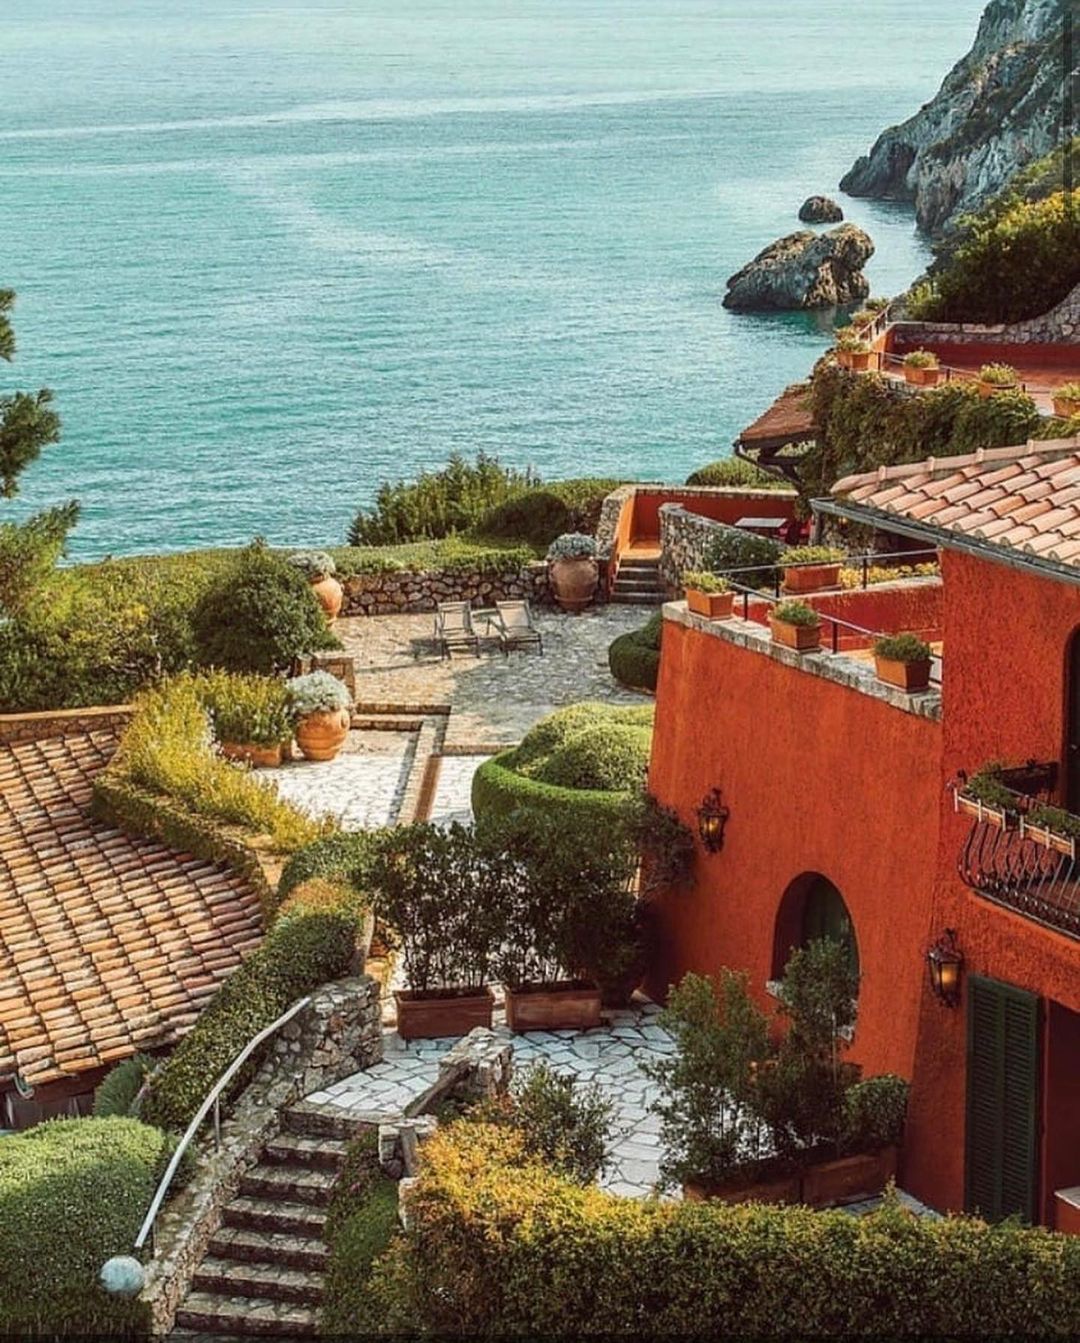 The legendary Hotel Il Pellicano nestled along the rugged Tuscan coastline